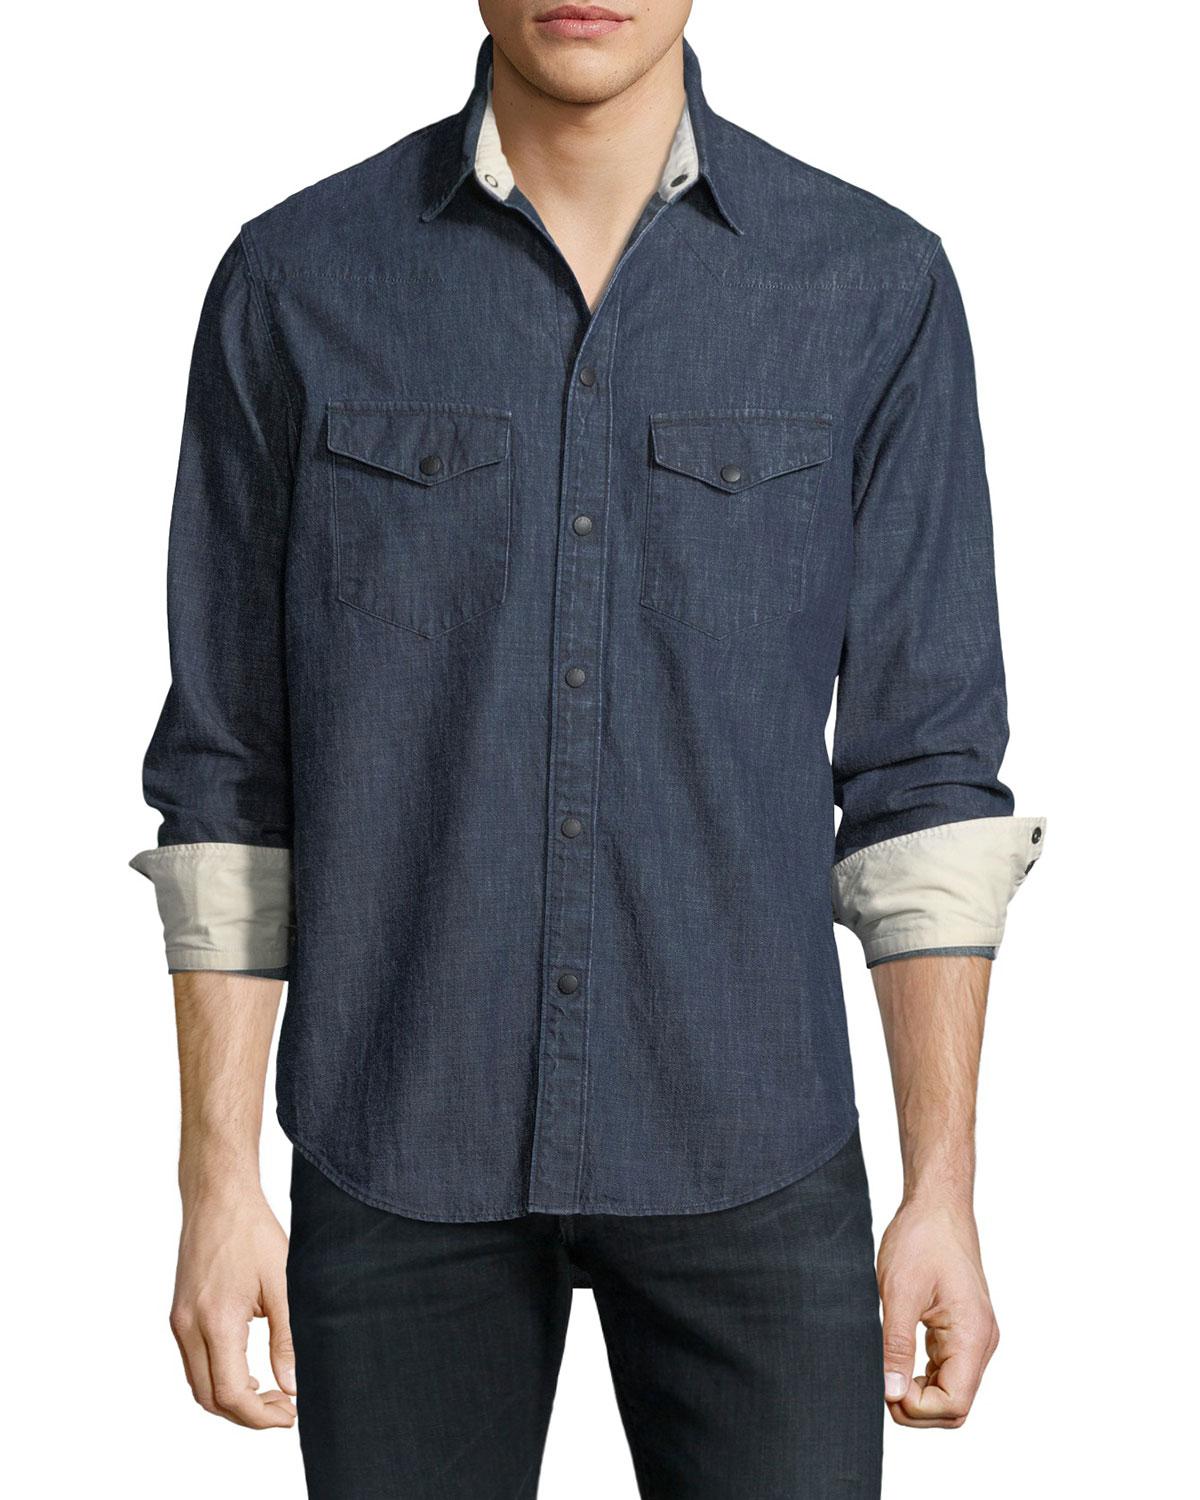 Lyst - Rag & Bone Men's Beck Denim Western Shirt in Blue for Men